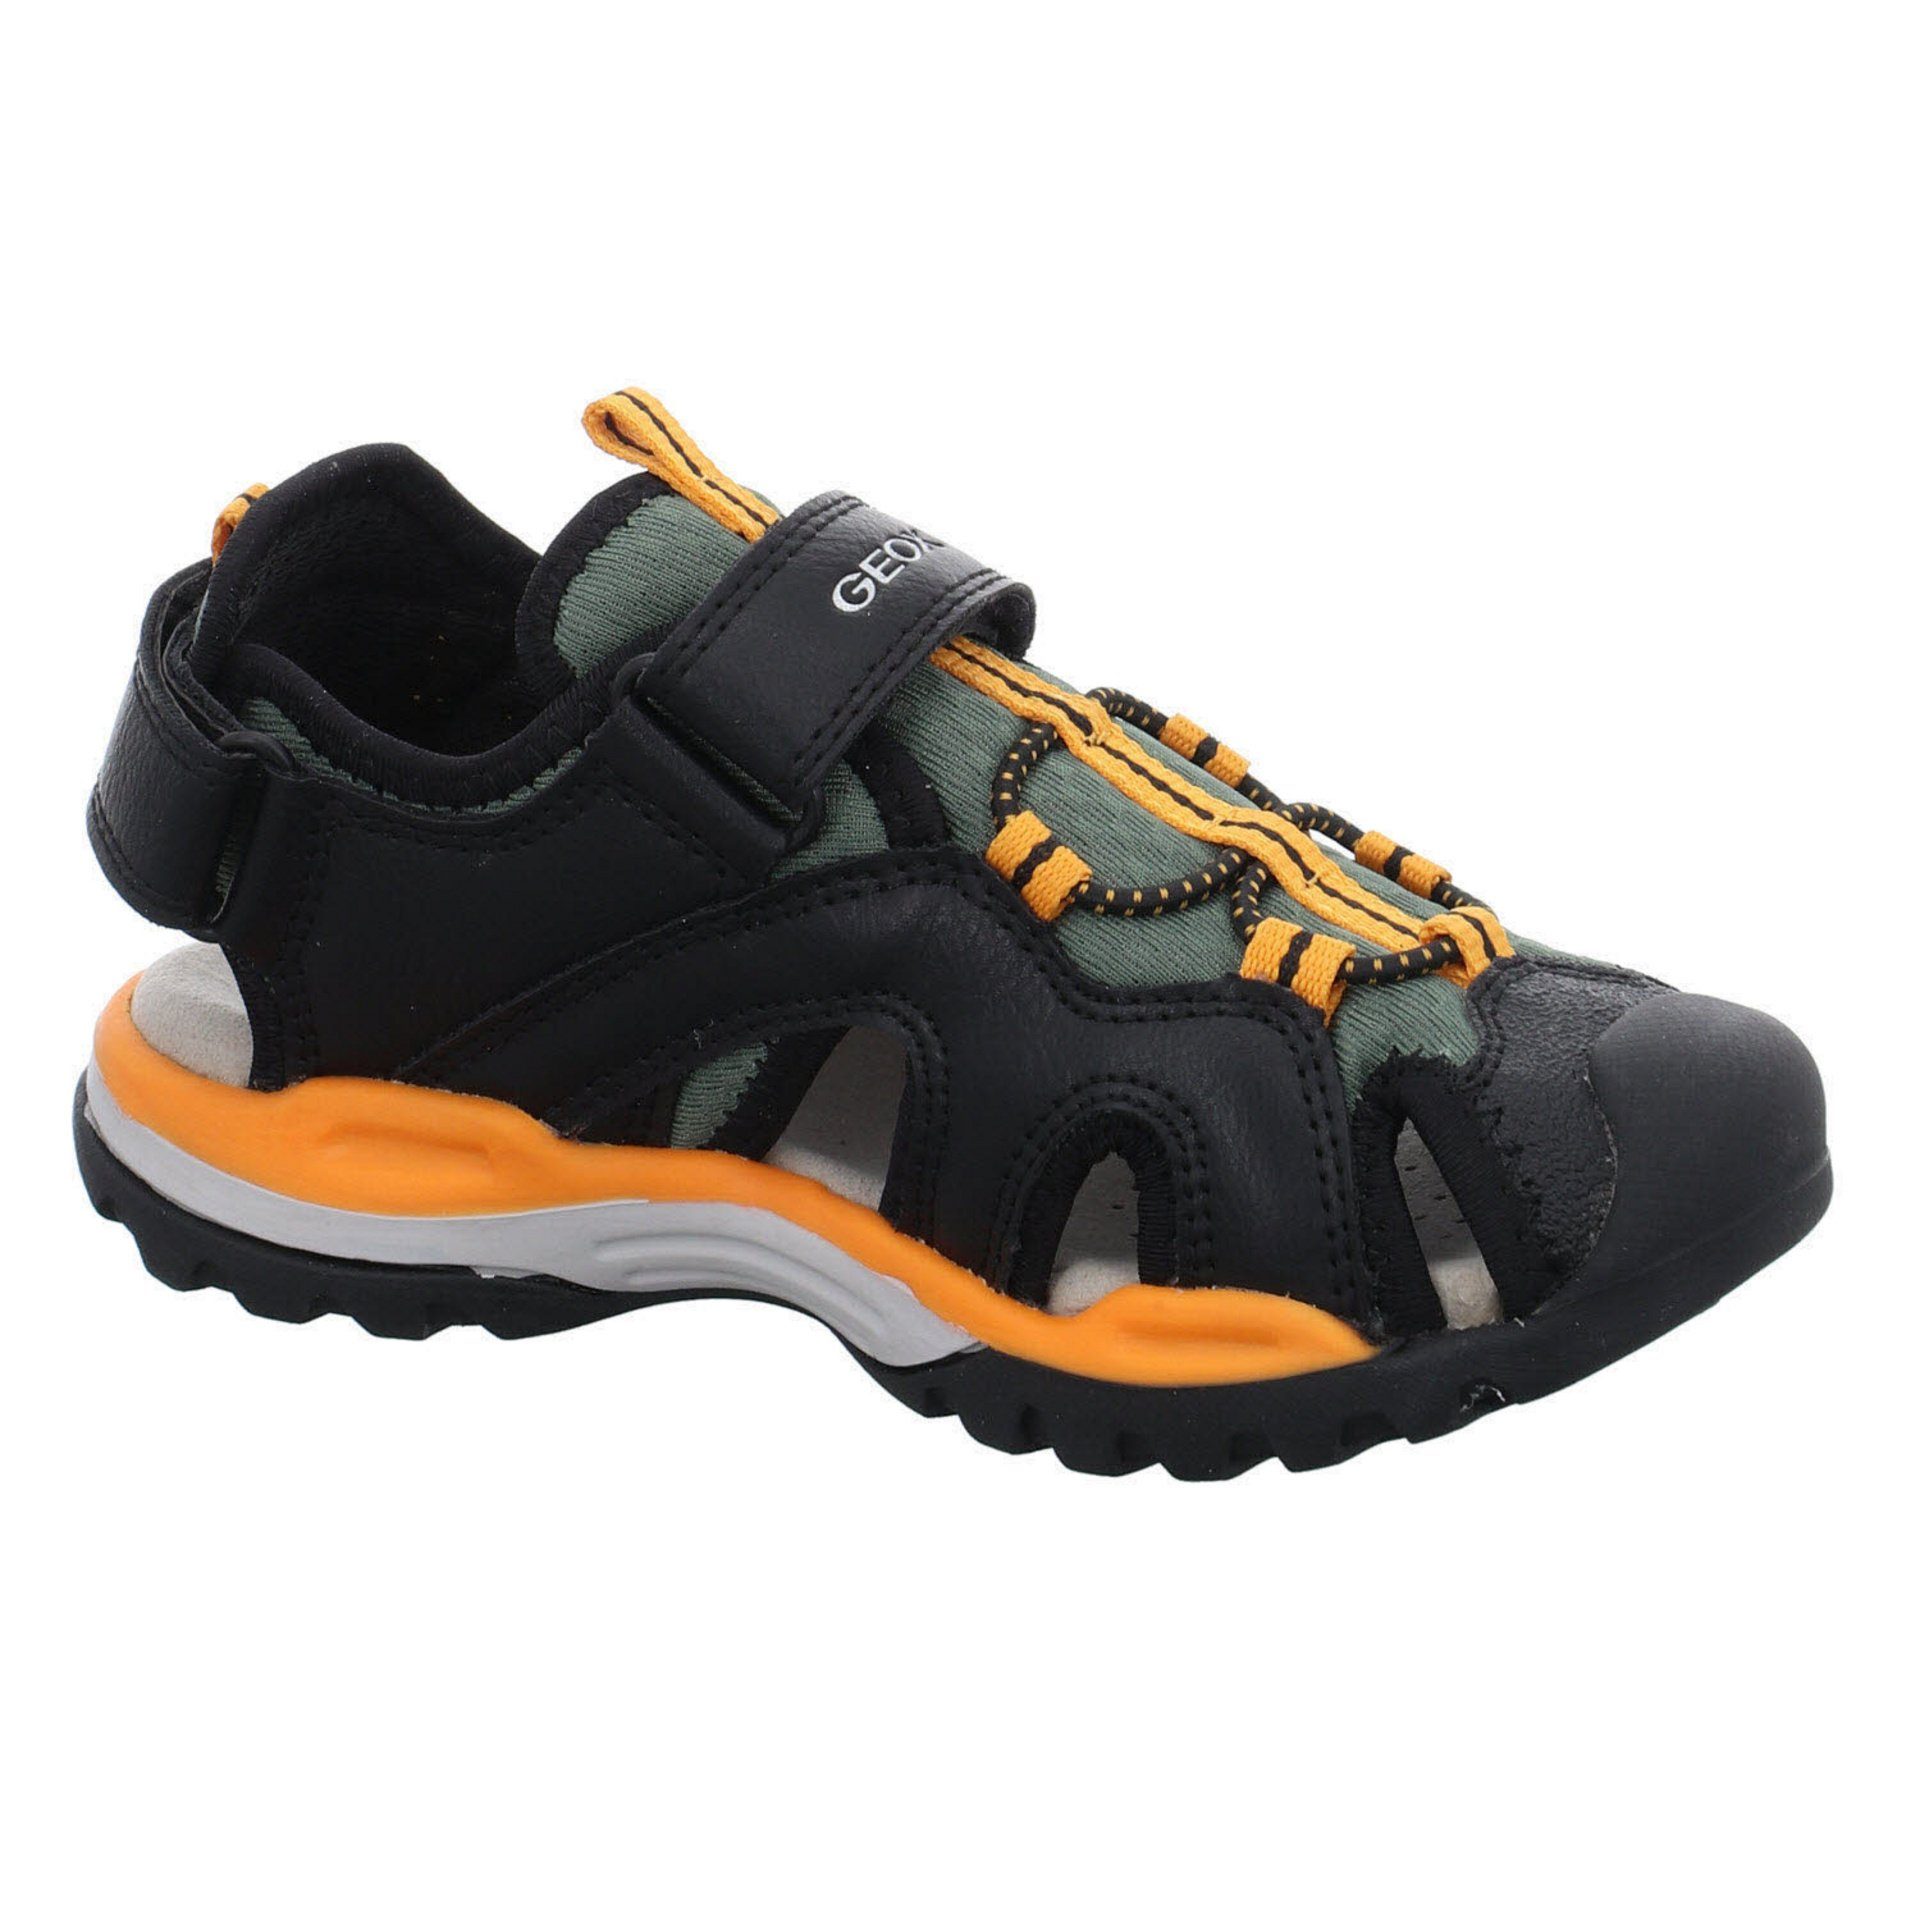 Schwarz Schuhe Sandale Jungen Orange Geox Outdoorsandale Sandalen Borealis Synthetikkombination